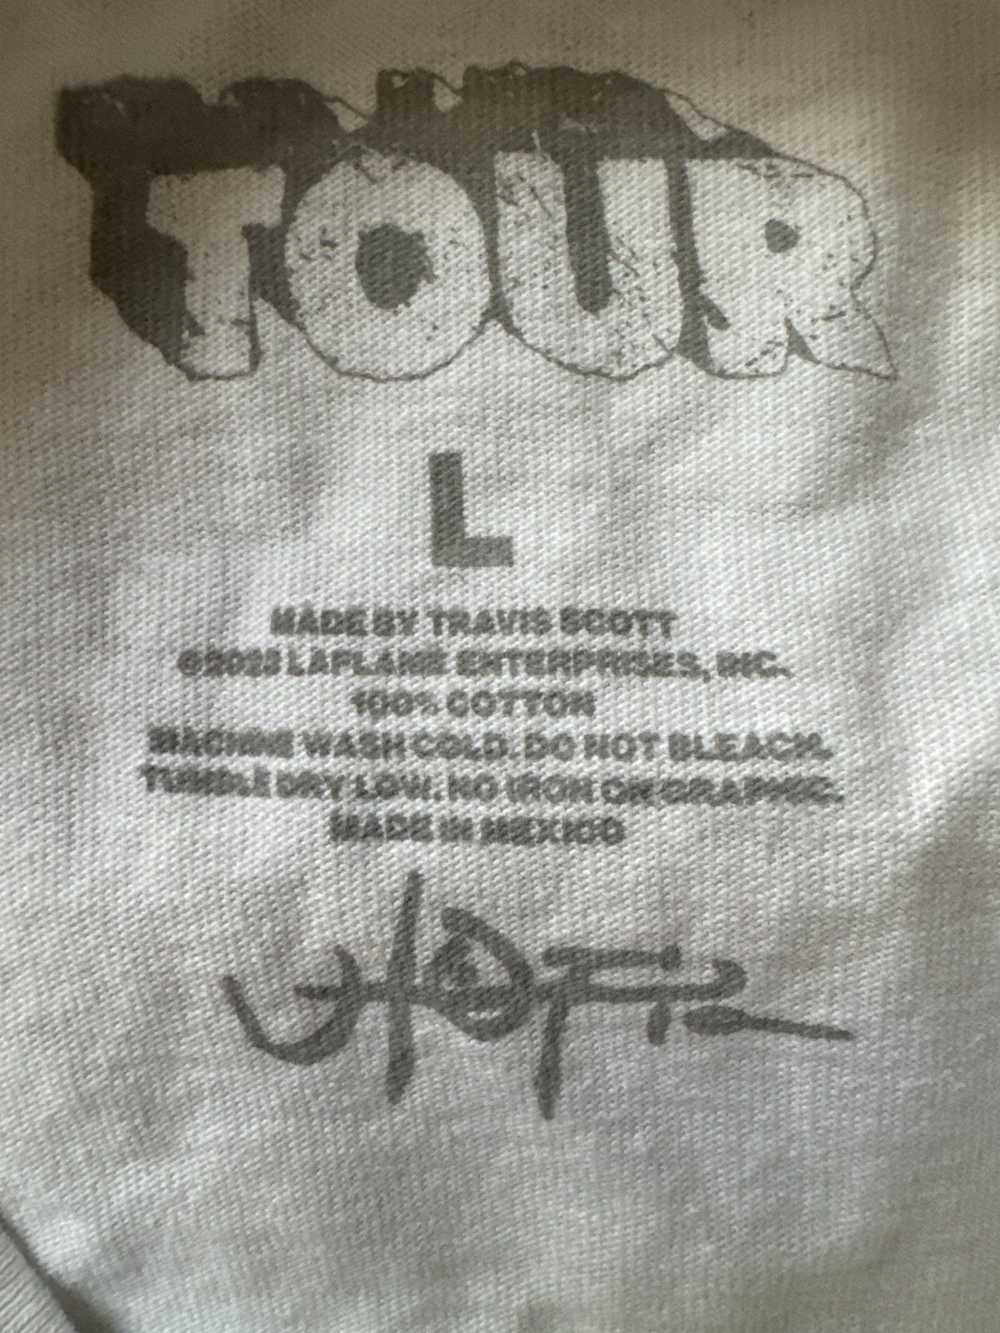 Travis Scott Circus Maximus T-Shirt Tour Merch - image 2